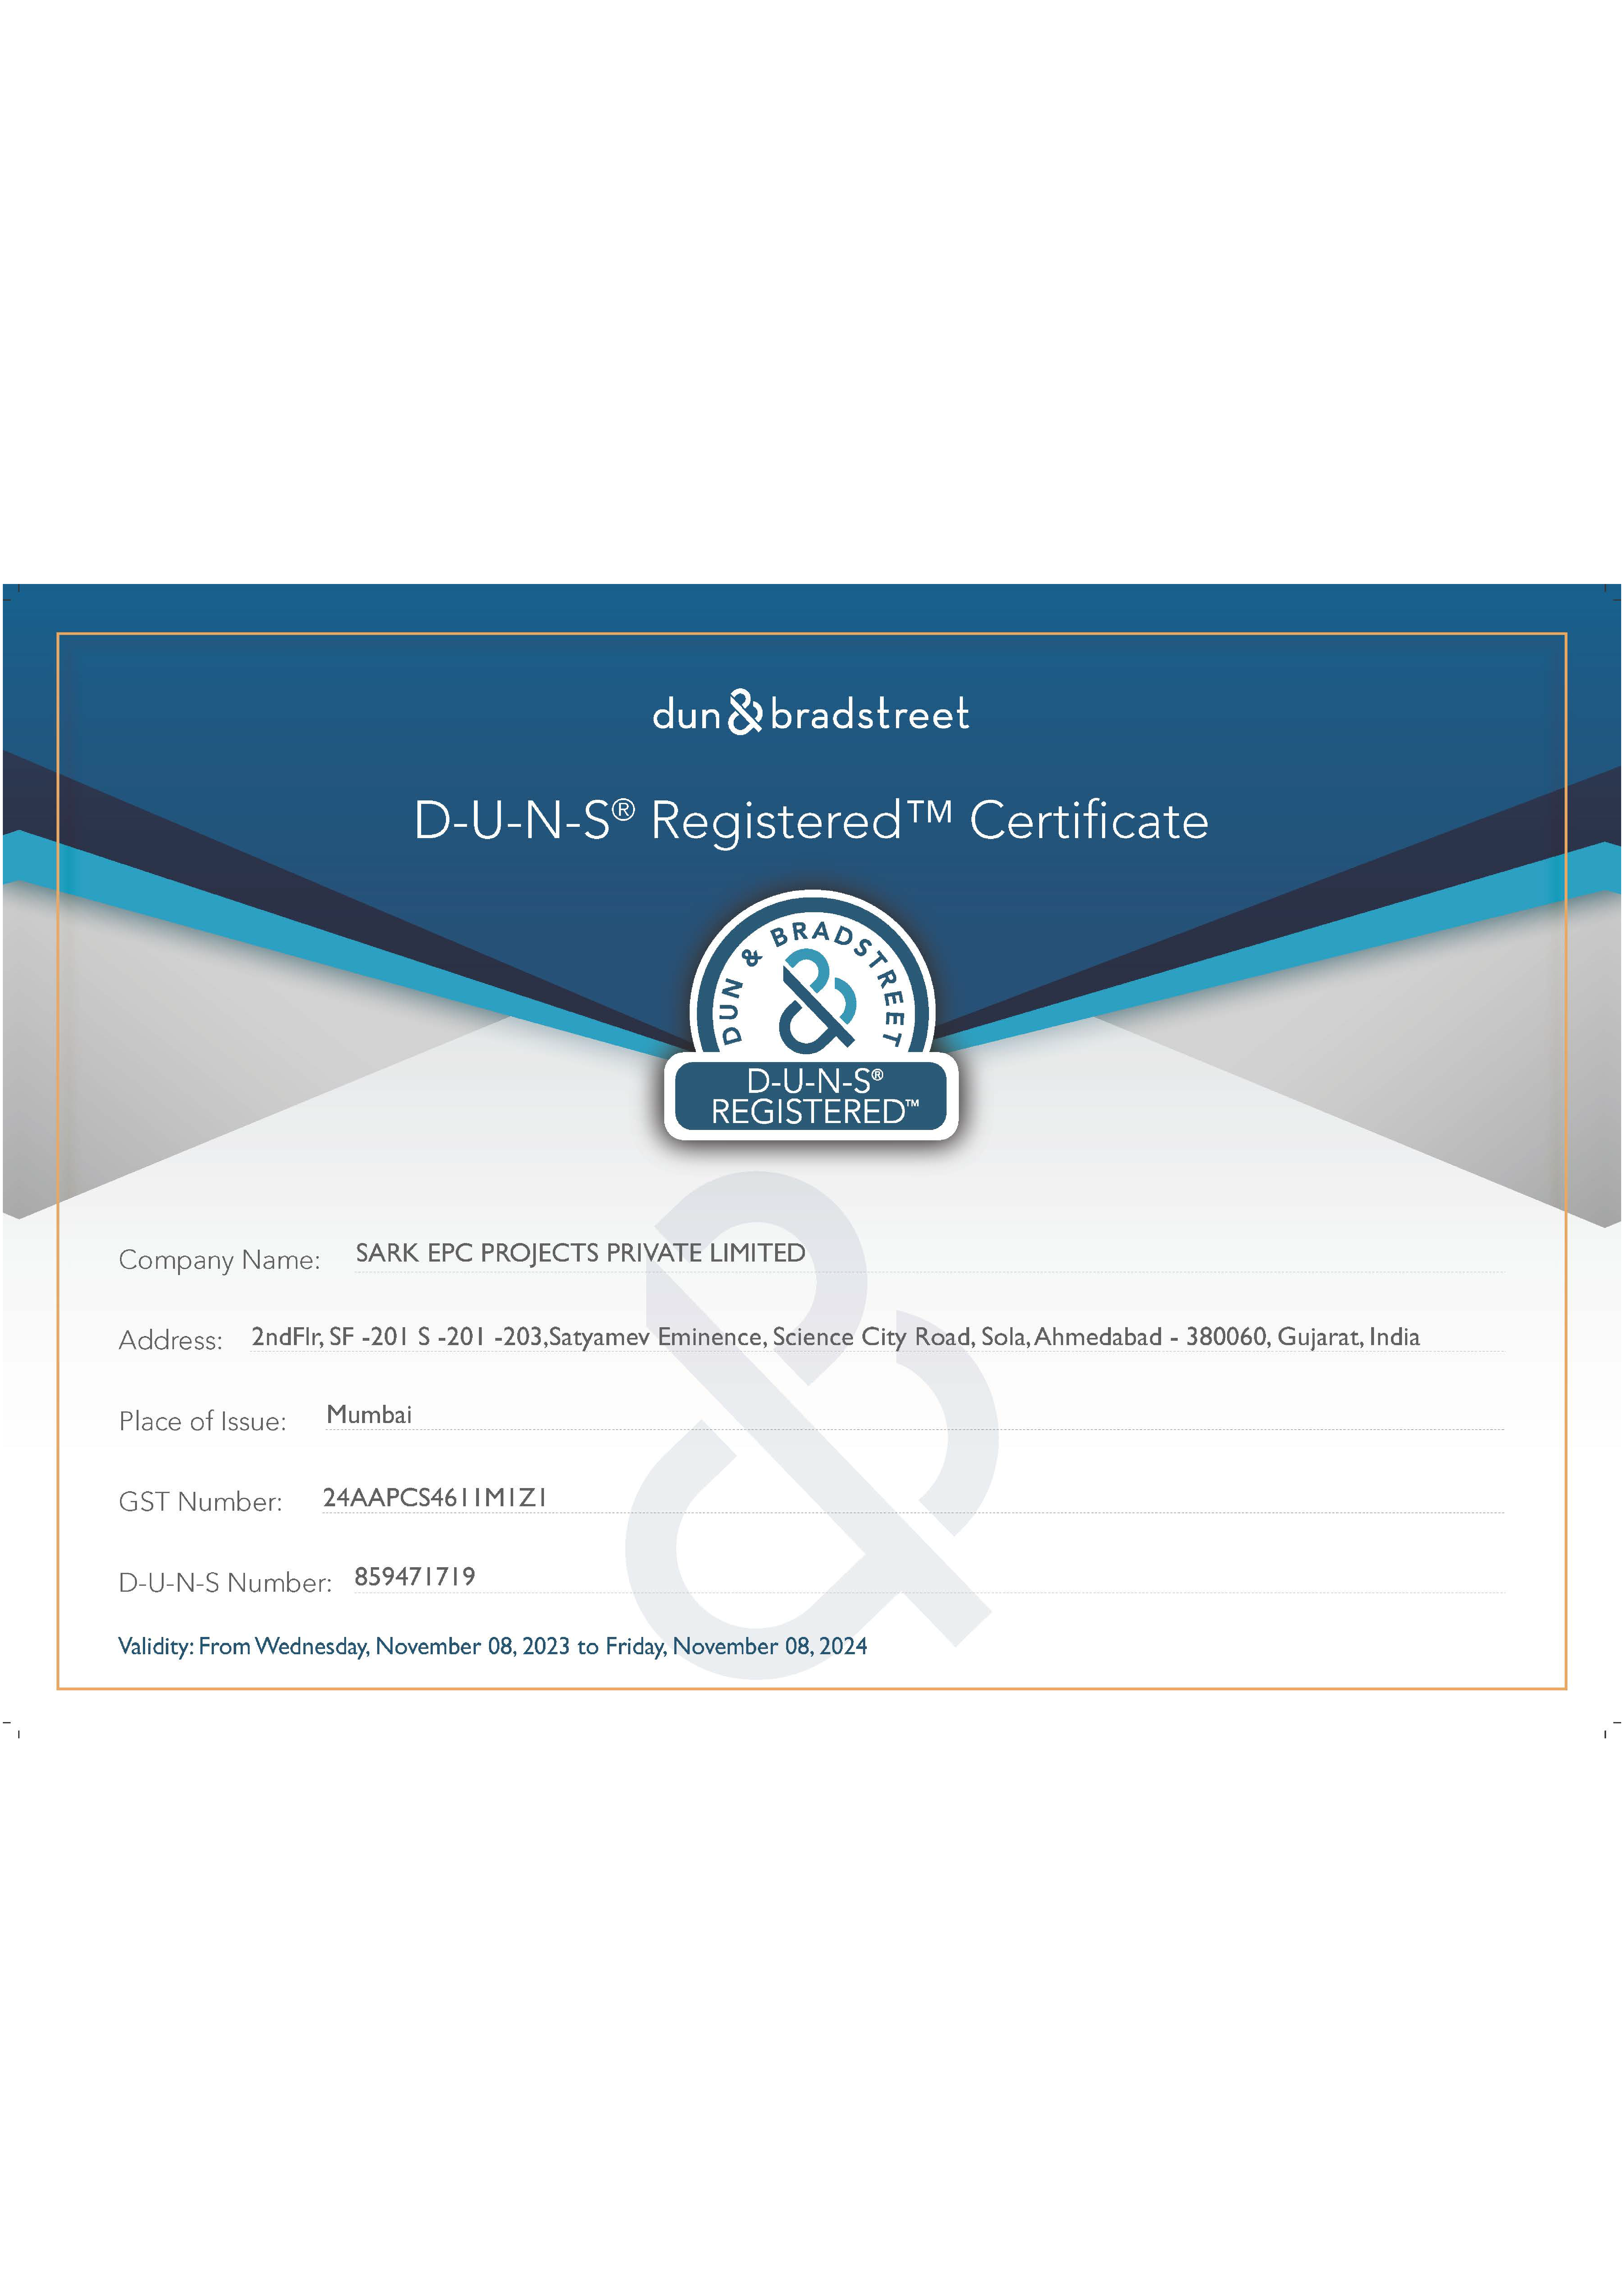 DUNS Registration Certificate